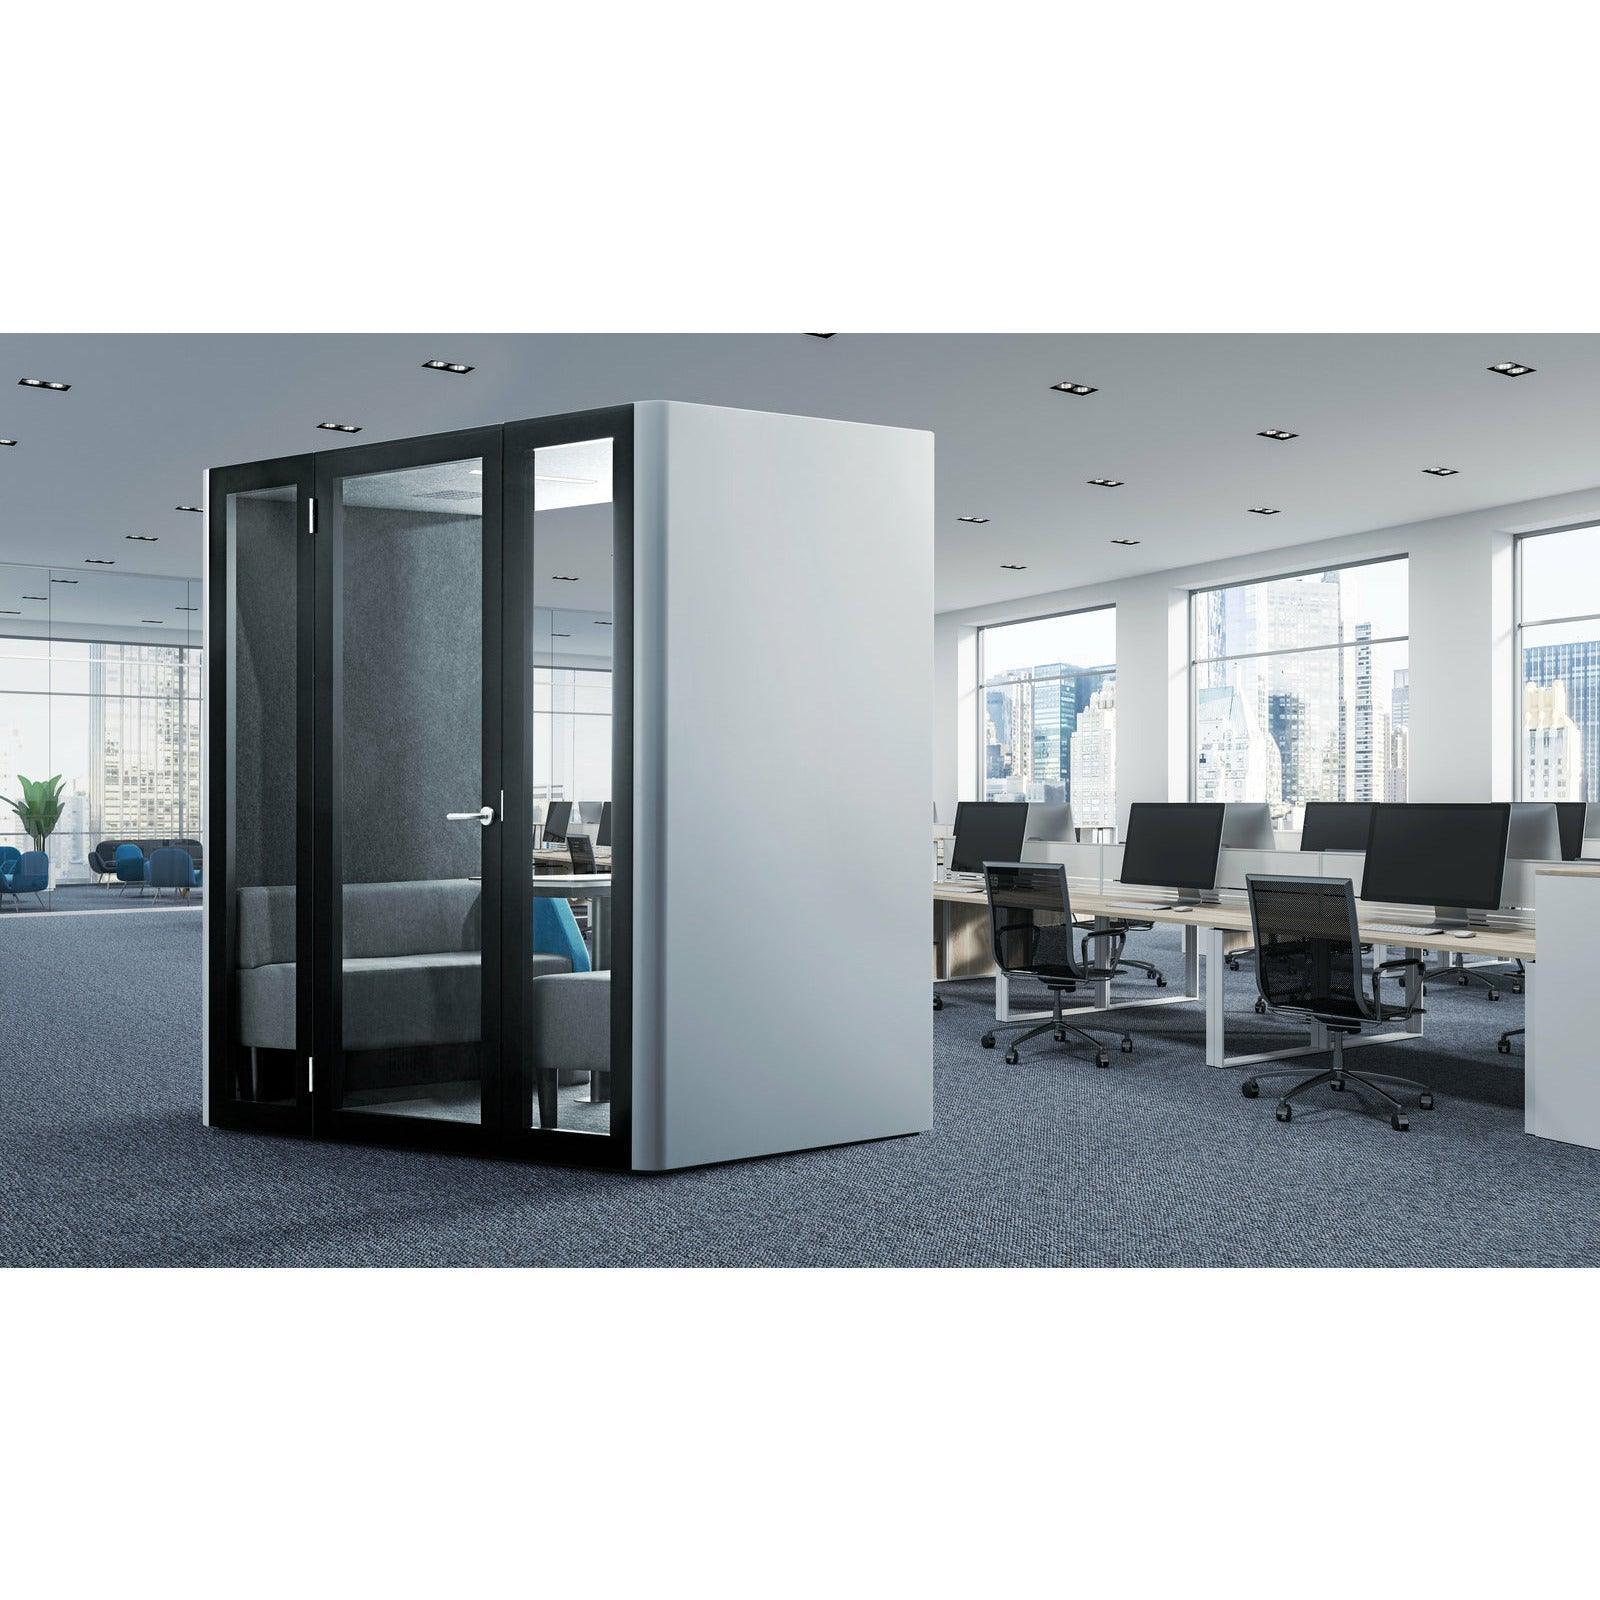 Inapod D Pod 2-4 Person Meeting Pod - Office Furniture Company 